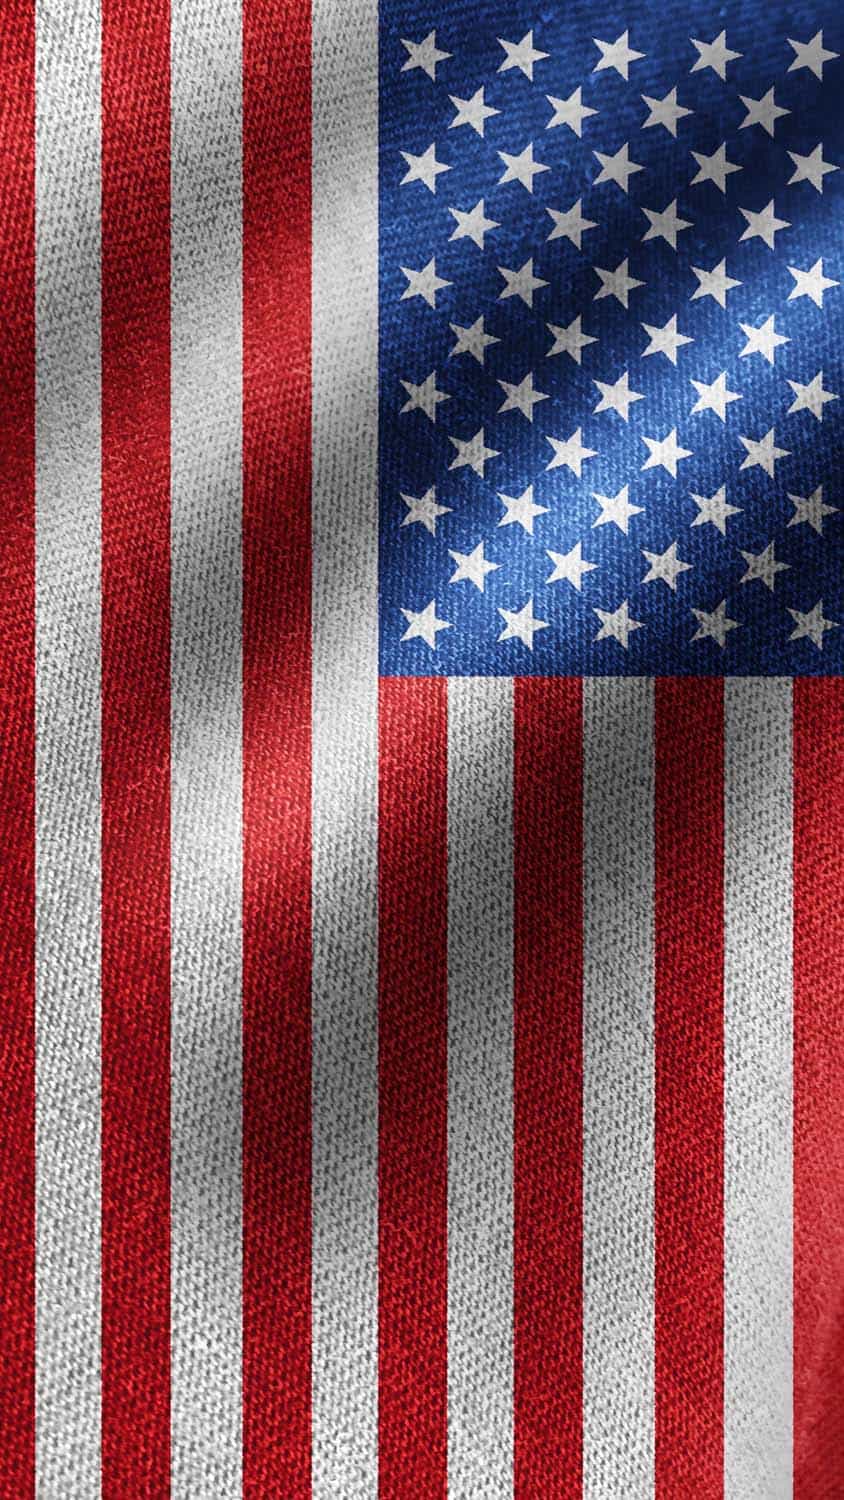 US Flag iPhone Wallpaper HD